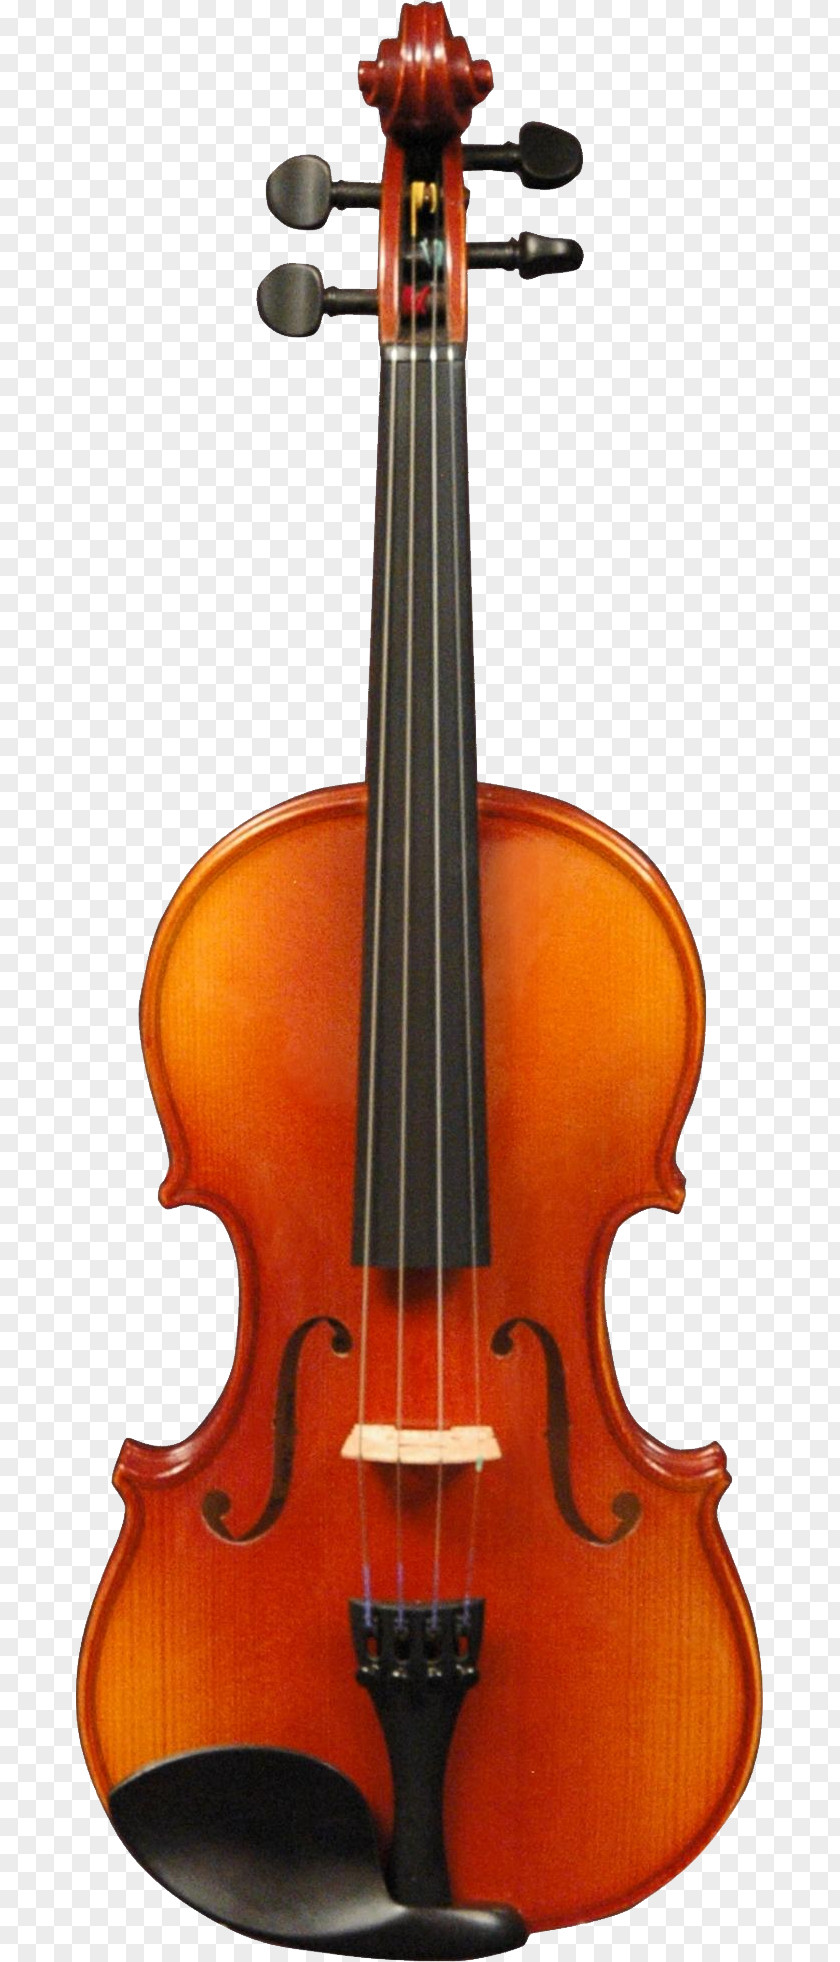 Violin Cartoon Electric Musical Instruments Yamaha Corporation Cello PNG